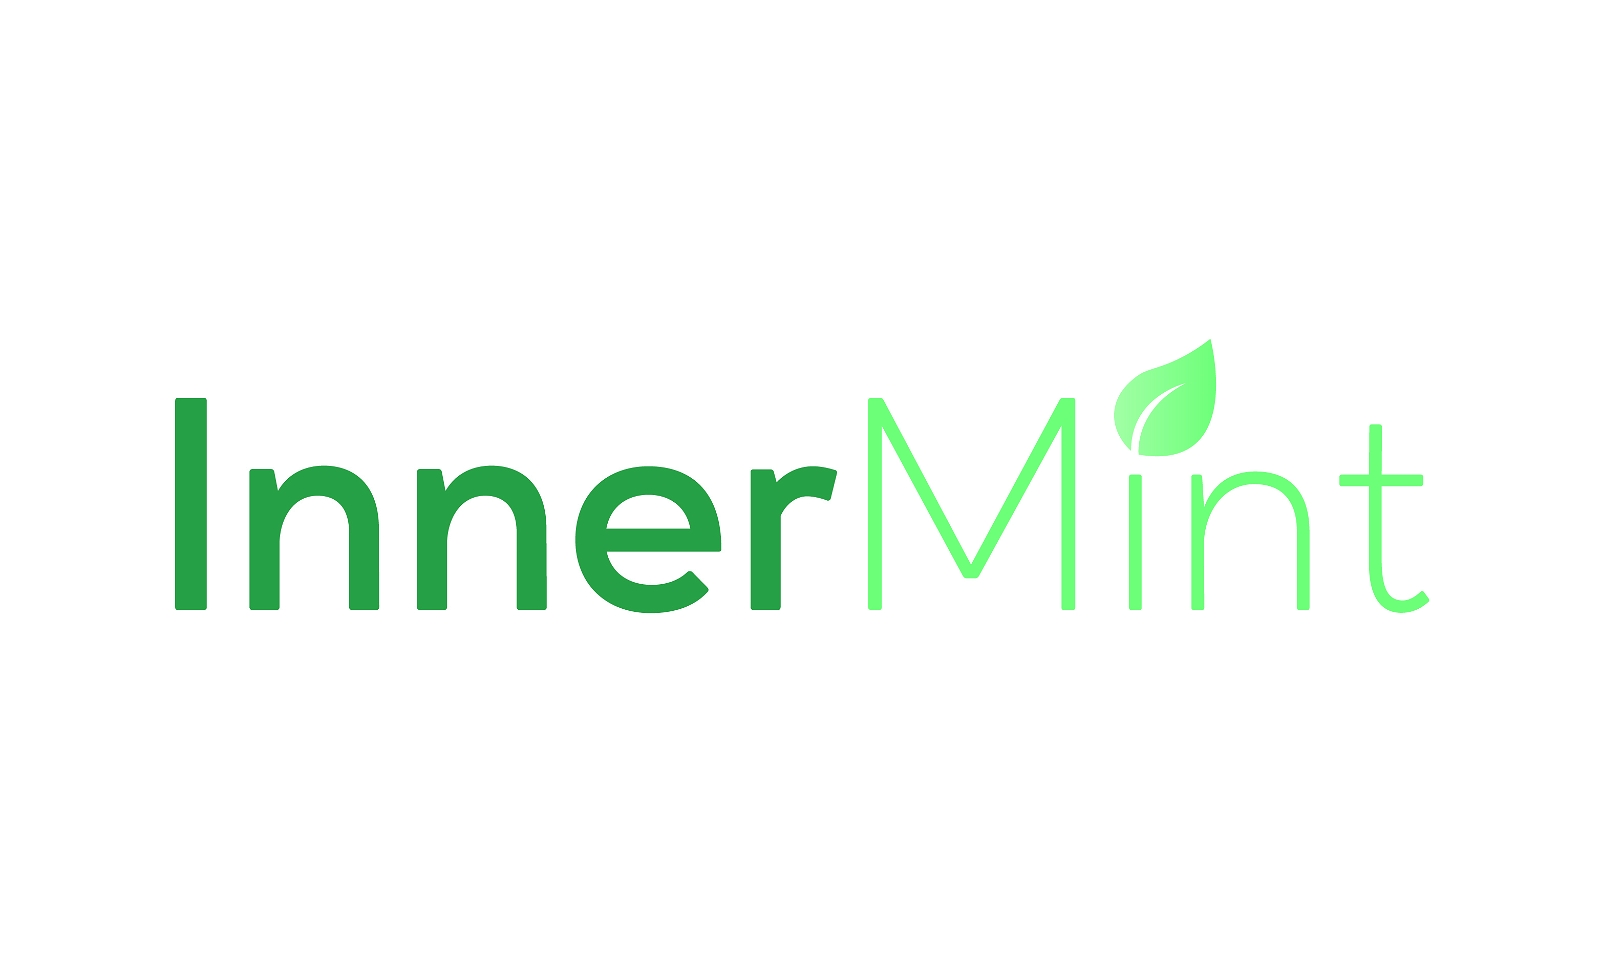 InnerMint.com - Creative brandable domain for sale